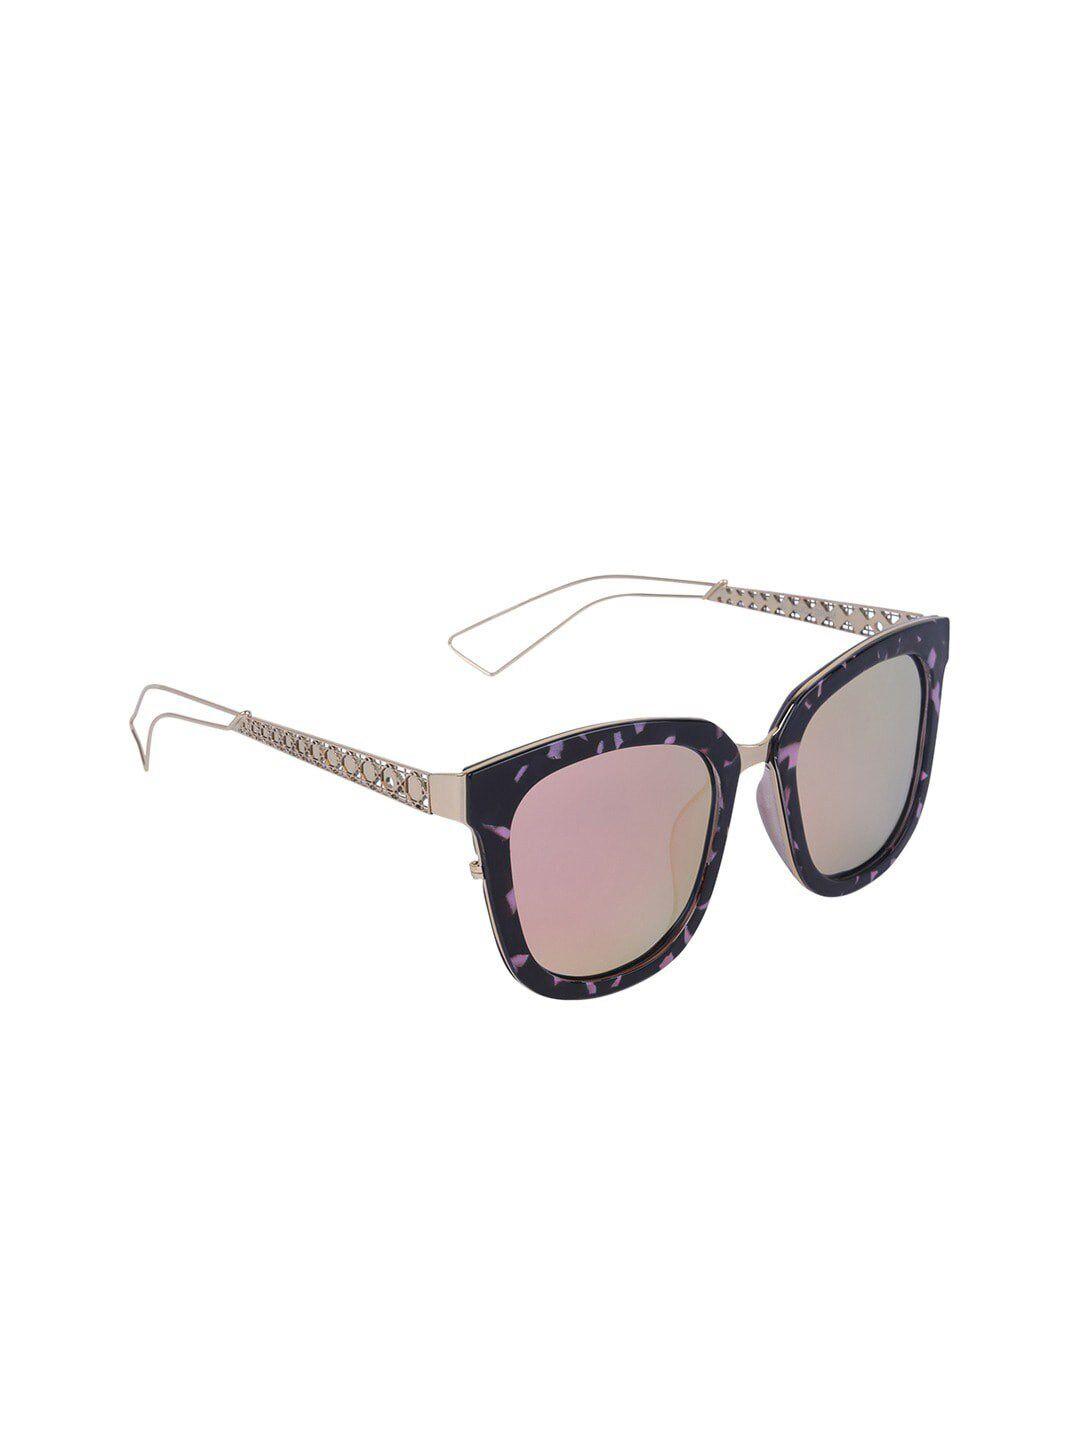 marc louis women pink lens & black sunglasses marc louis (tgtha diorama-6 pink1